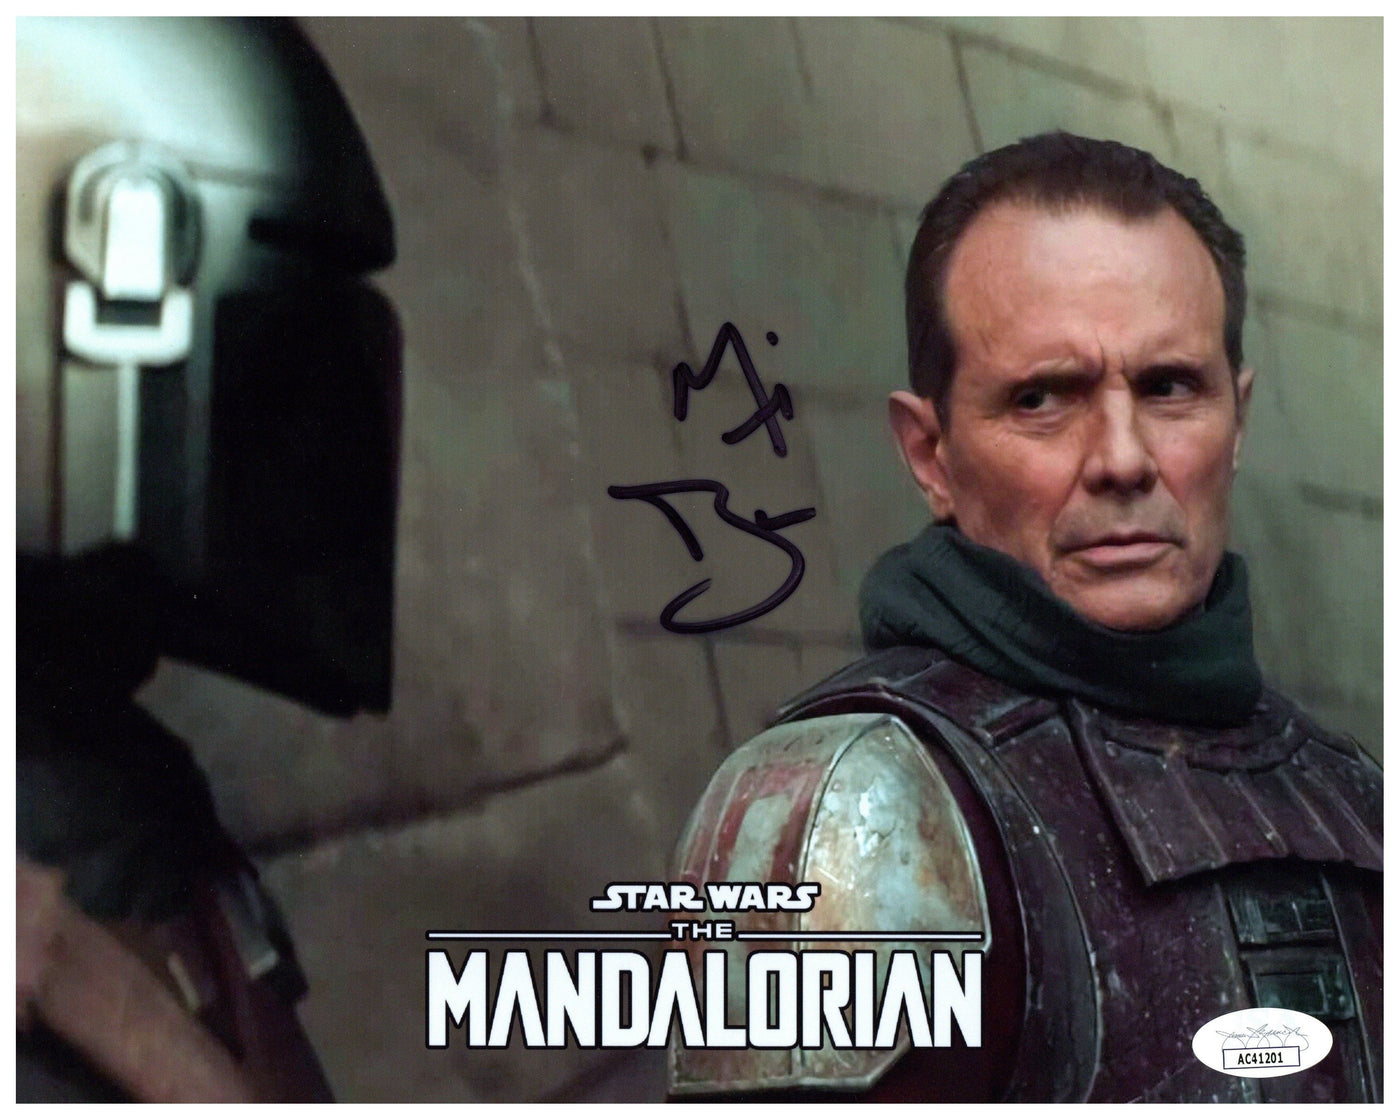 Michael Biehn Signed 8x10 Photo Star Wars The Mandalorian Autographed JSA COA